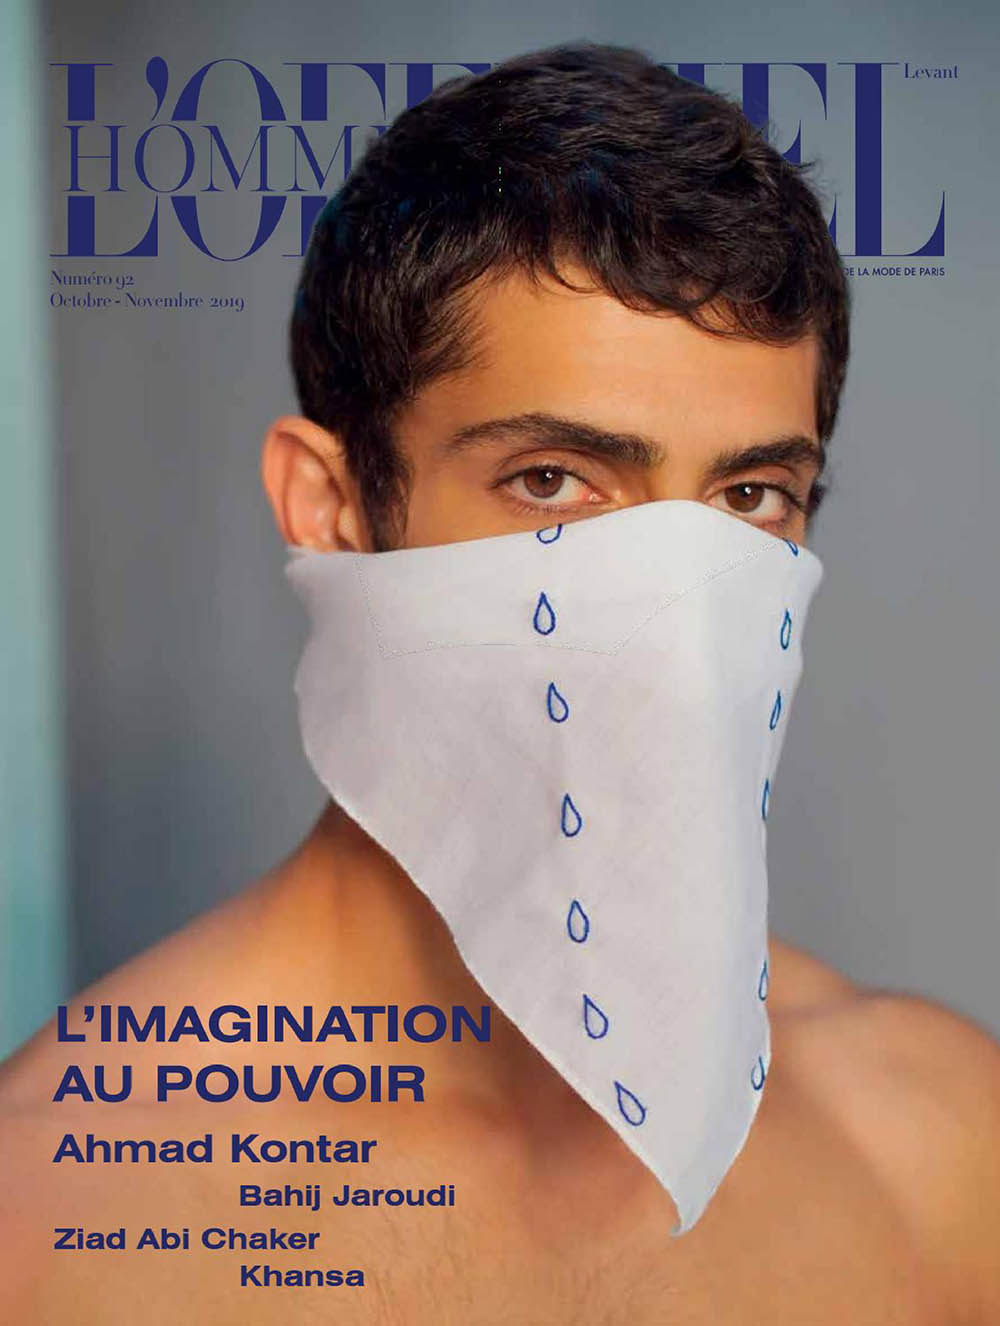 Ahmad Kontar covers L’Officiel Hommes Levant October November 2019 by Jules Faure